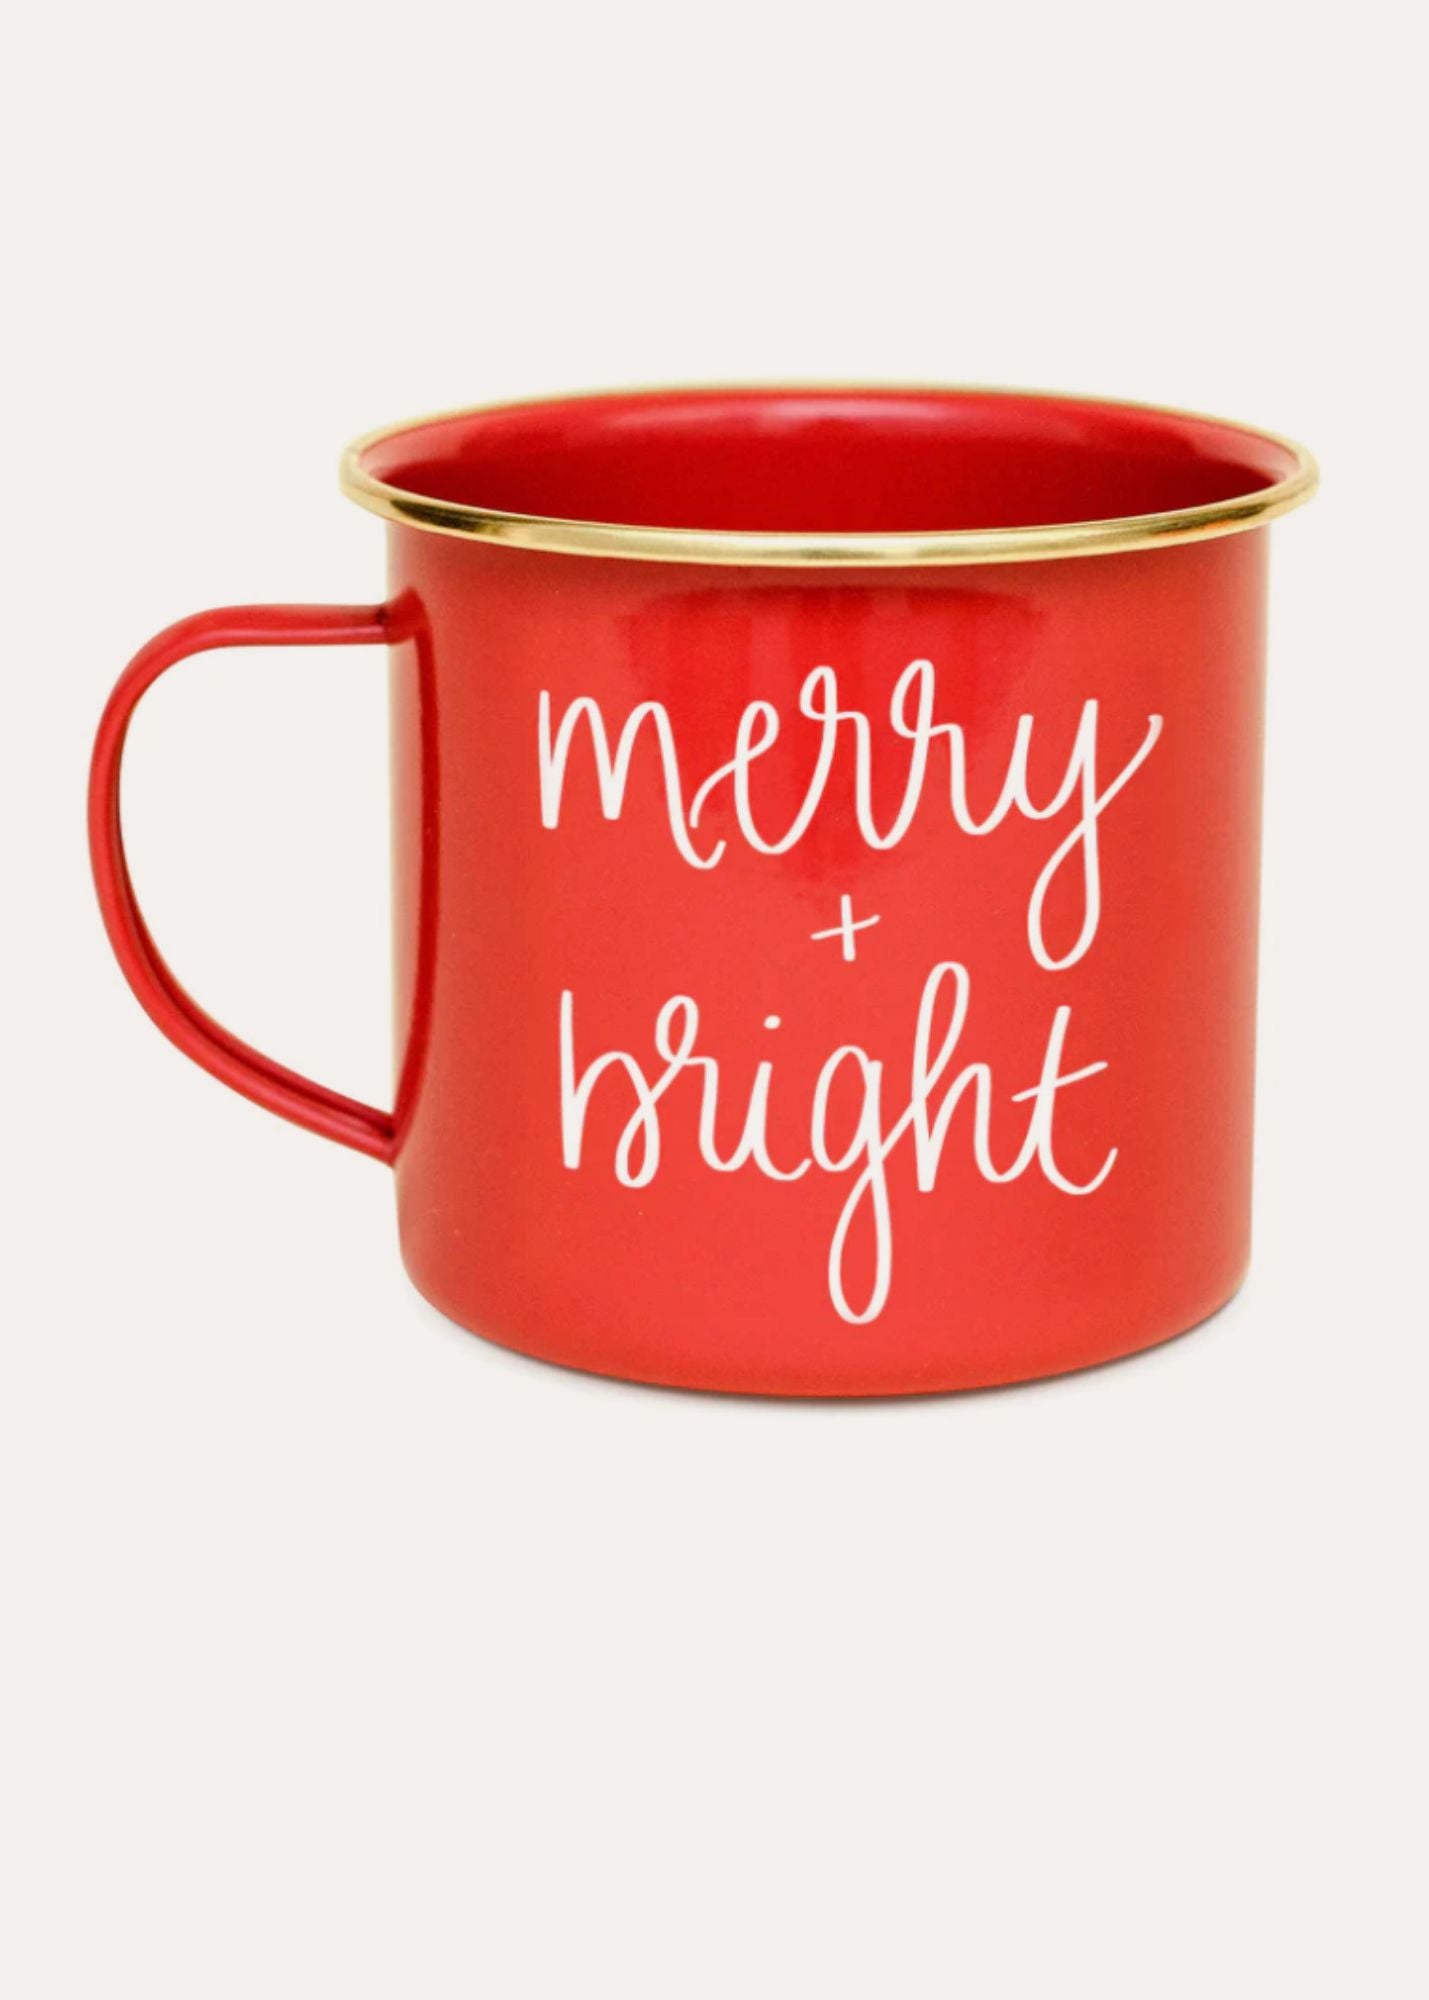 Christmas Campfire Mug Gifts Merry & Bright